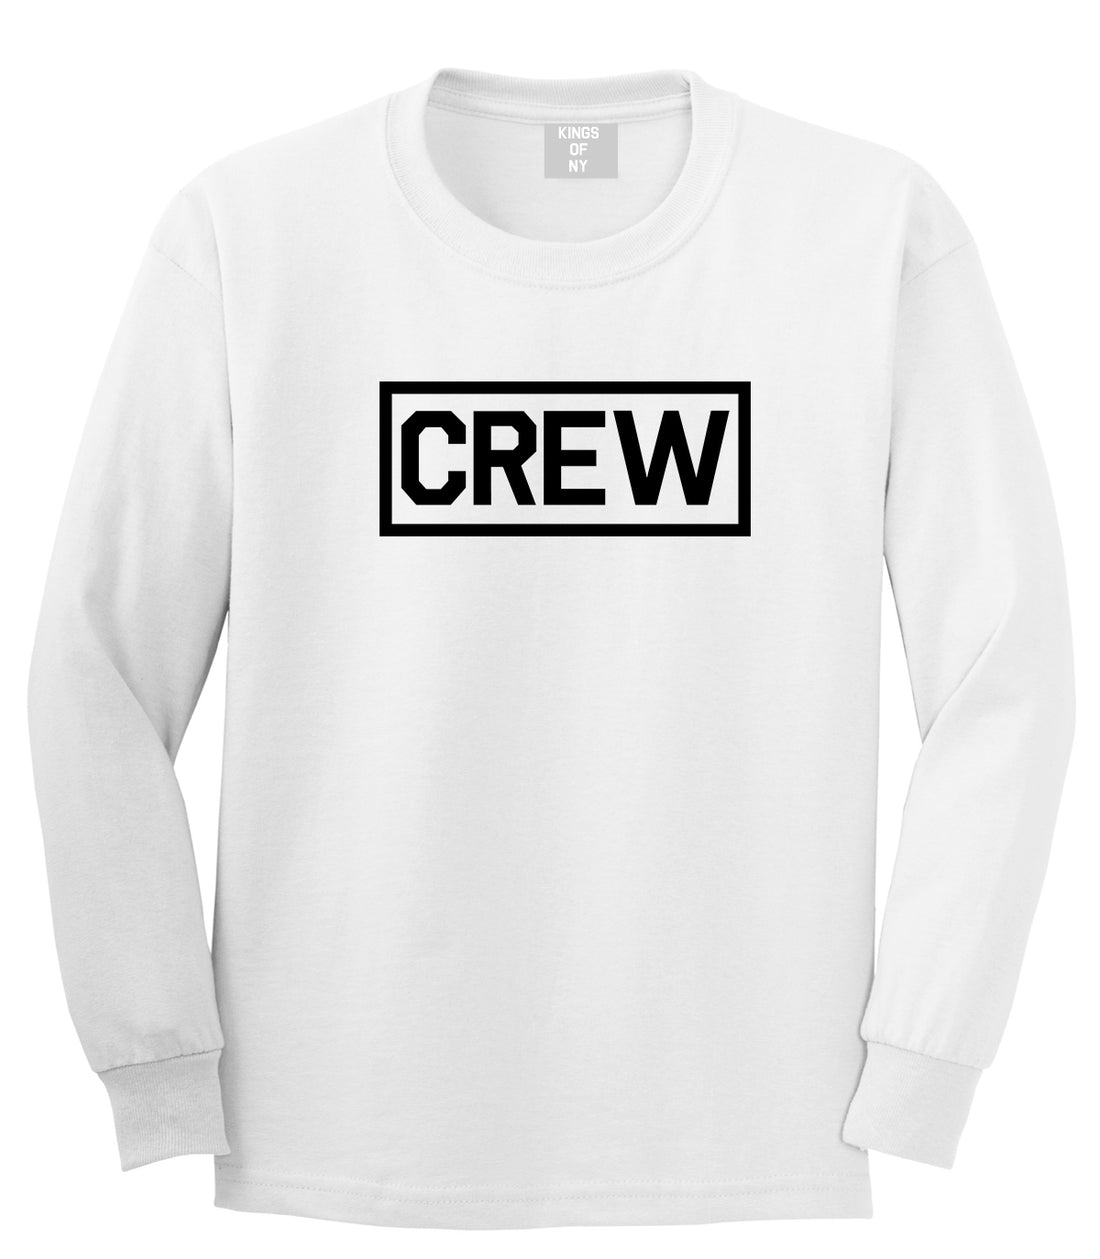 Crew Box White Long Sleeve T-Shirt by Kings Of NY